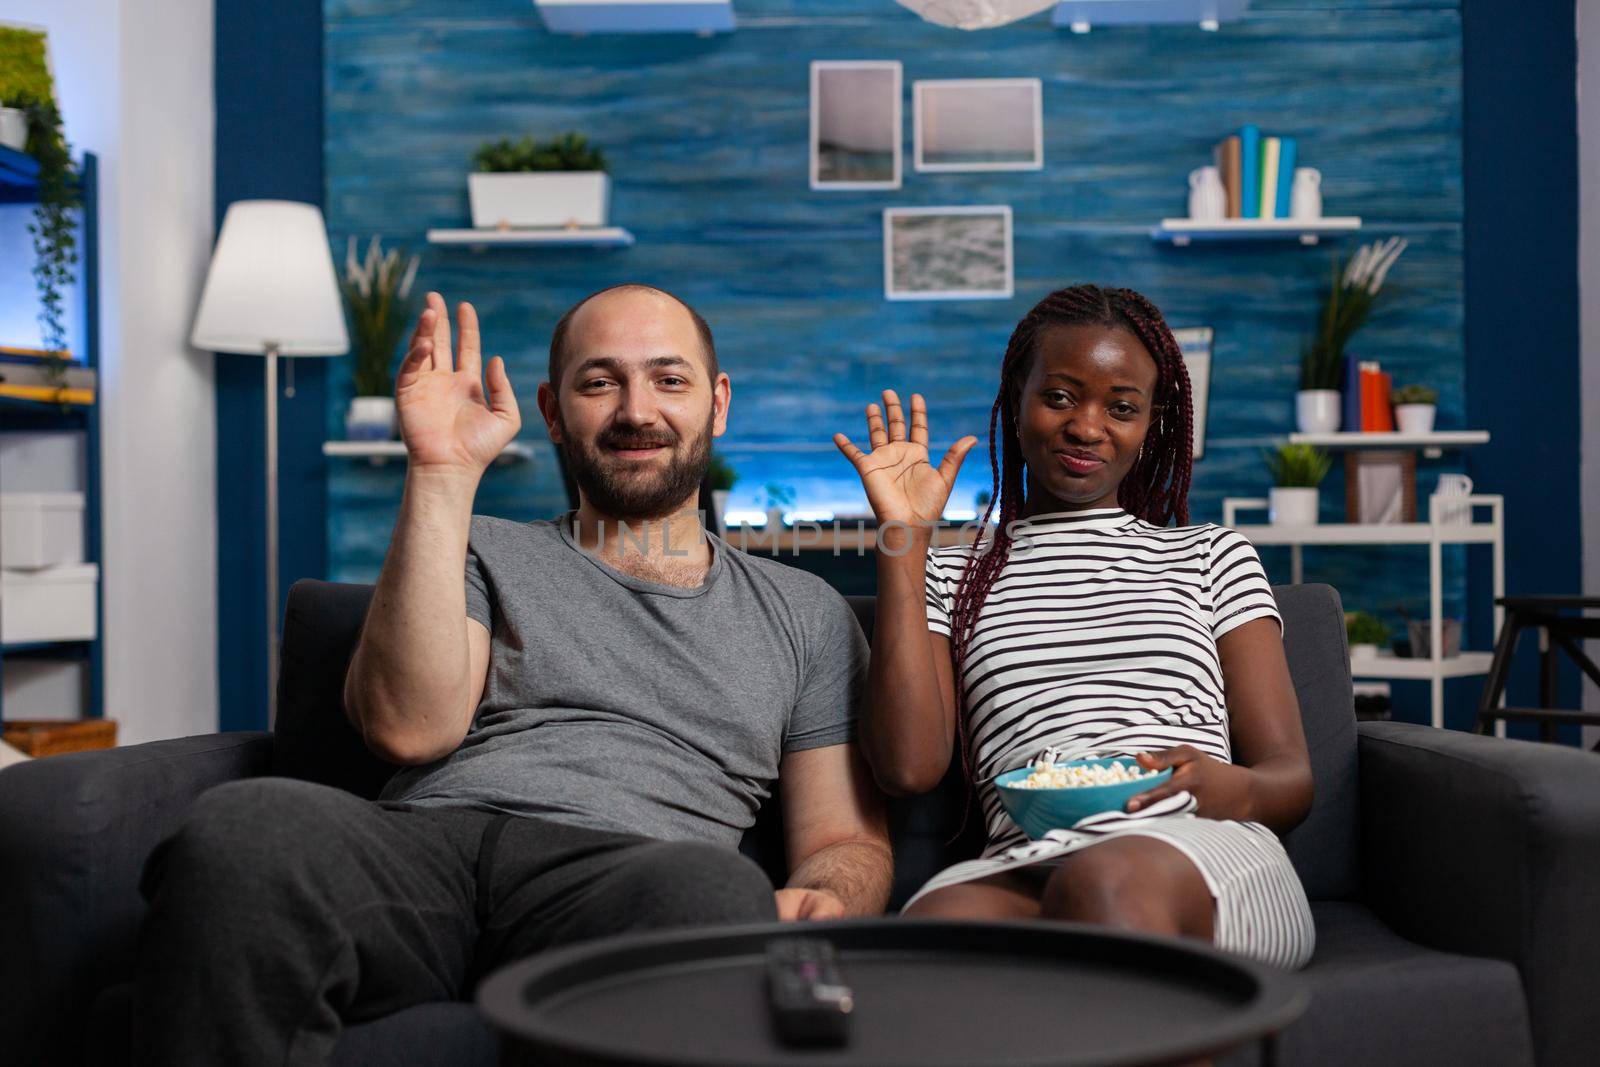 Interracial couple waving at video call camera using technology by DCStudio